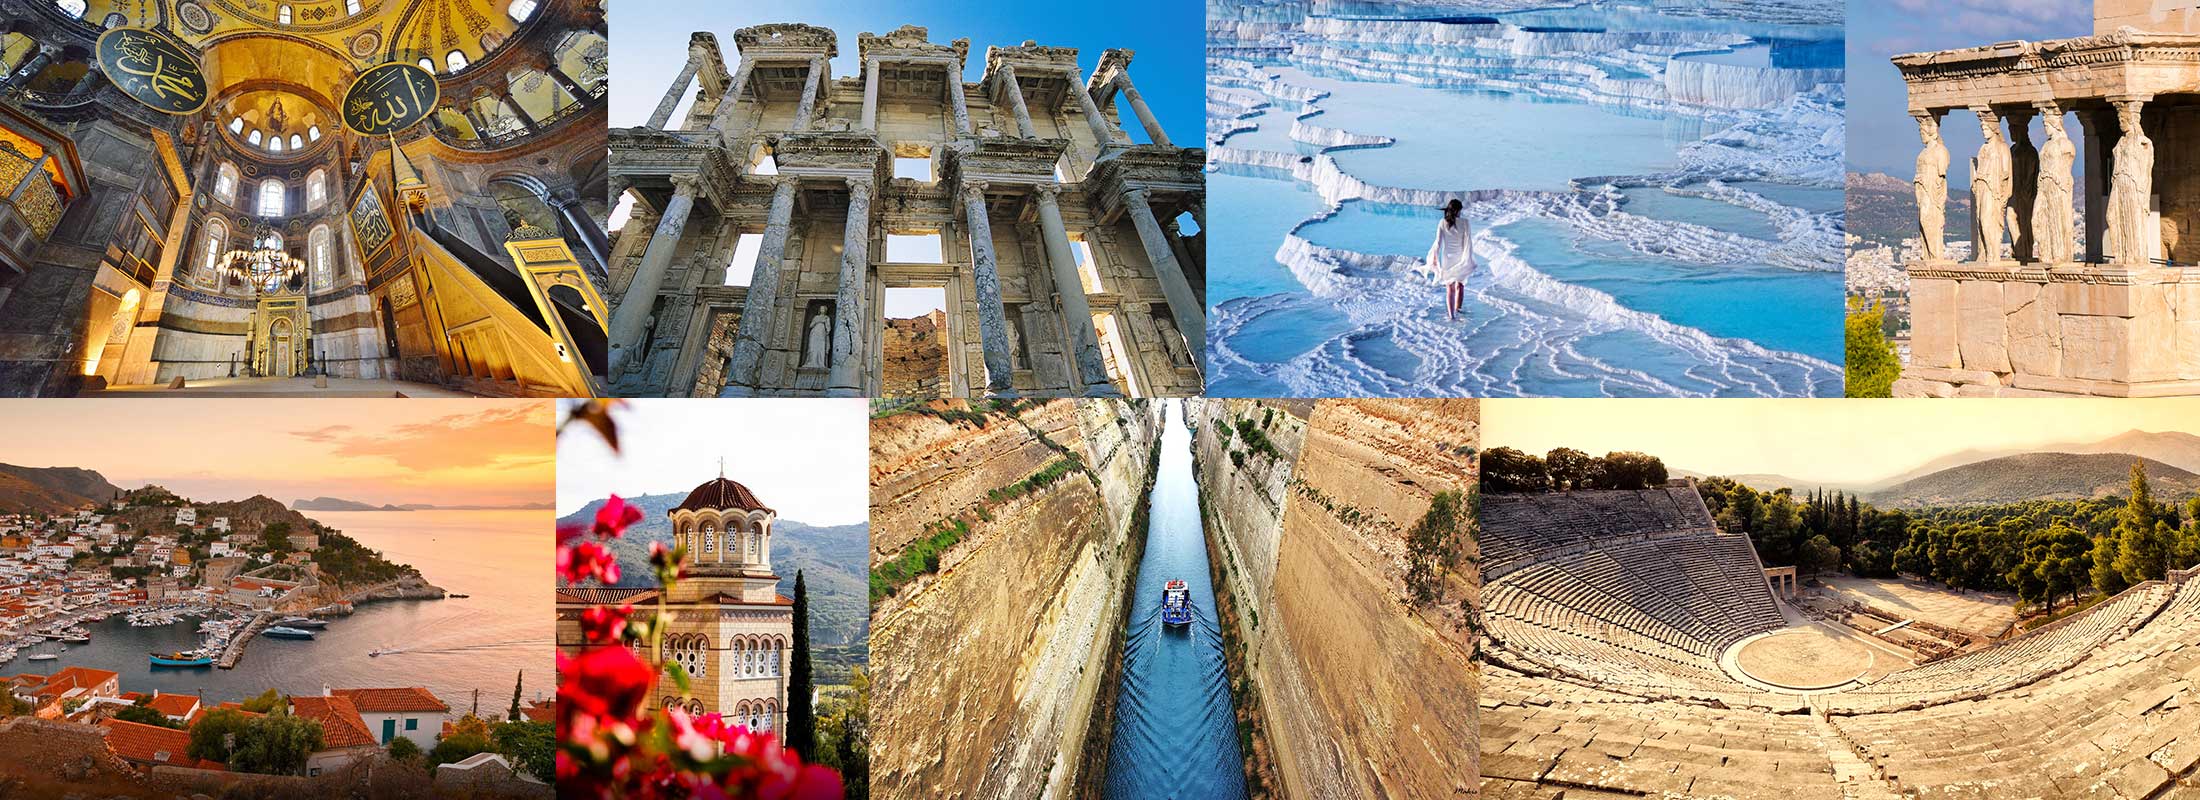 9-DAYS-TURKEY-GREECE-PACKAGE-TOUR-ISTANBUL-EPHESUS-PAMUKKALE-ATHENS-AEGINA-HYDRA-CORINTO-POROS